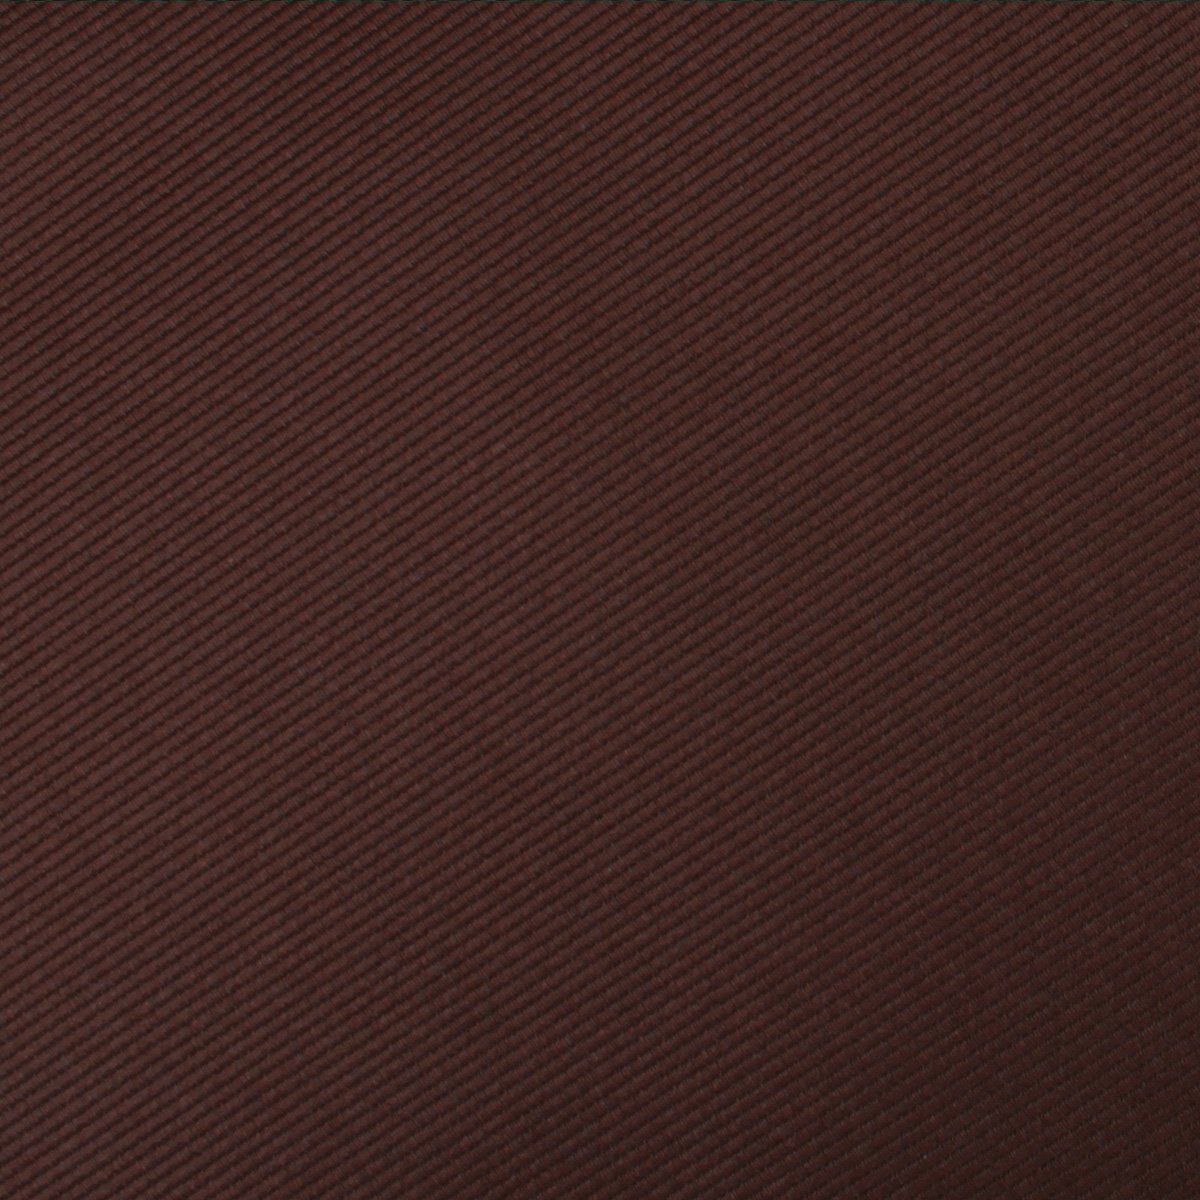 Chocolate Brown Twill Fabric Swatch